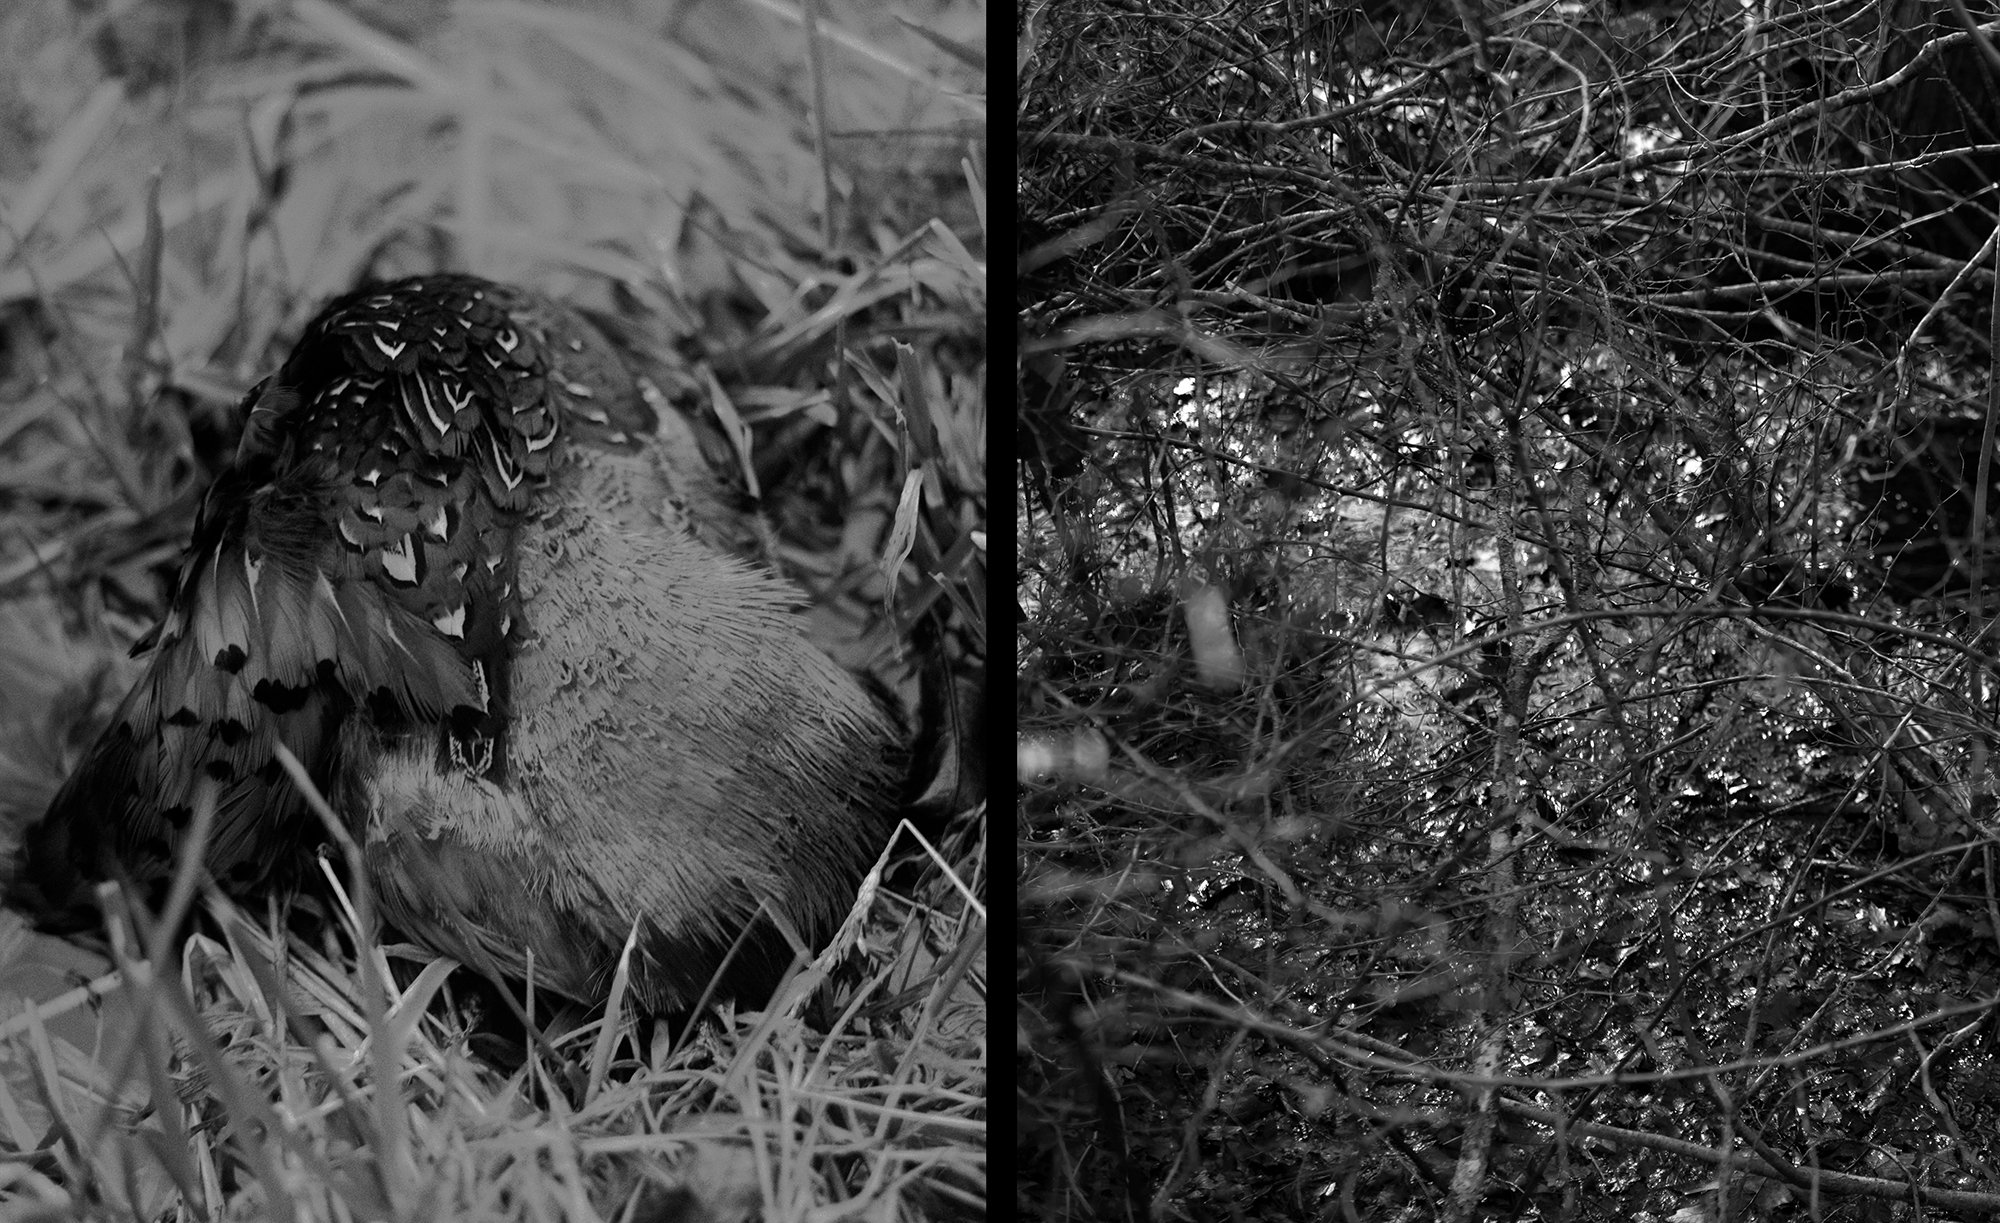 Reflection & Encounter (Pheasant Cap)